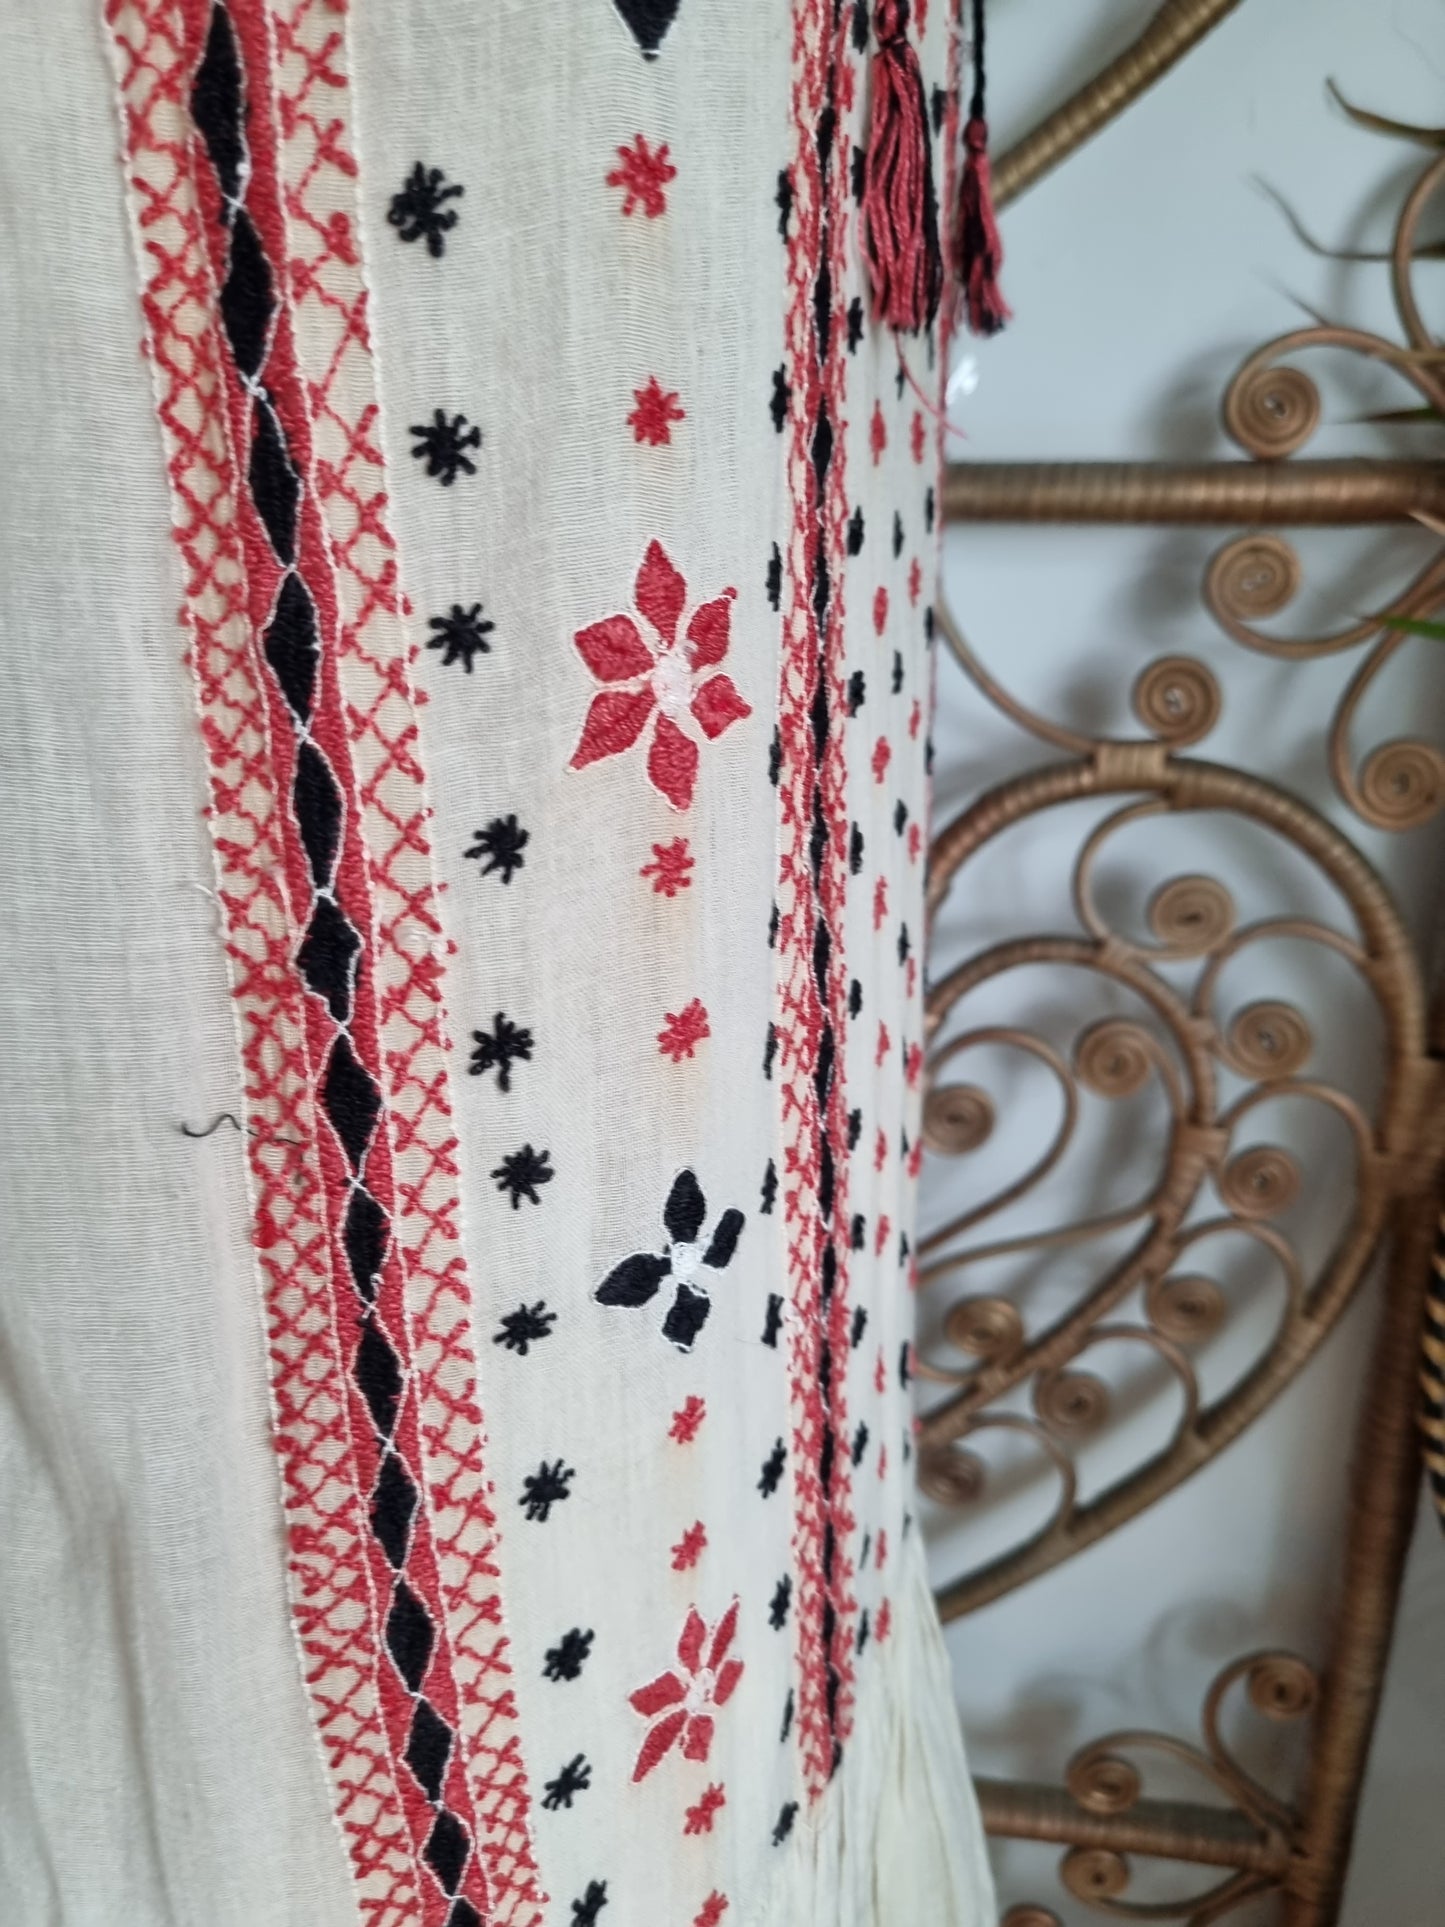 Vintage embroidered cotton dress